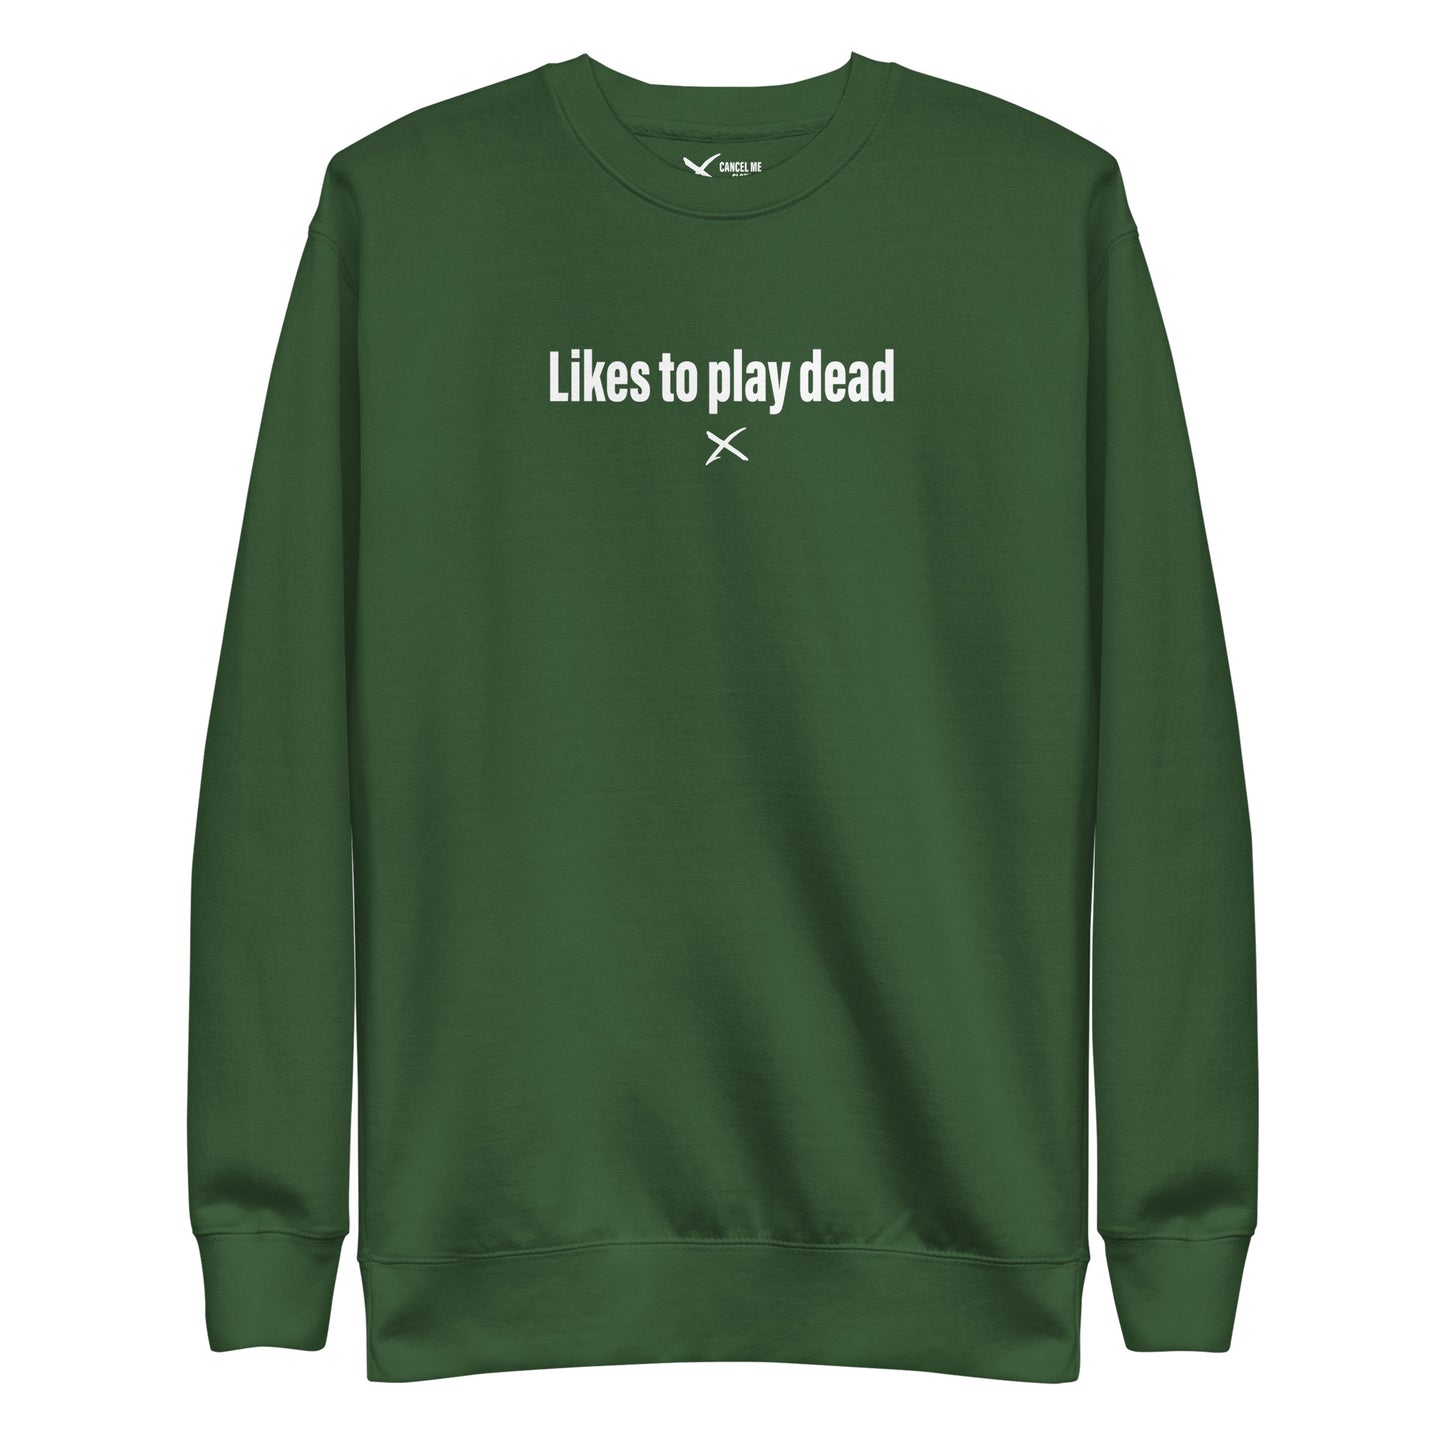 Likes to play dead - Sweatshirt